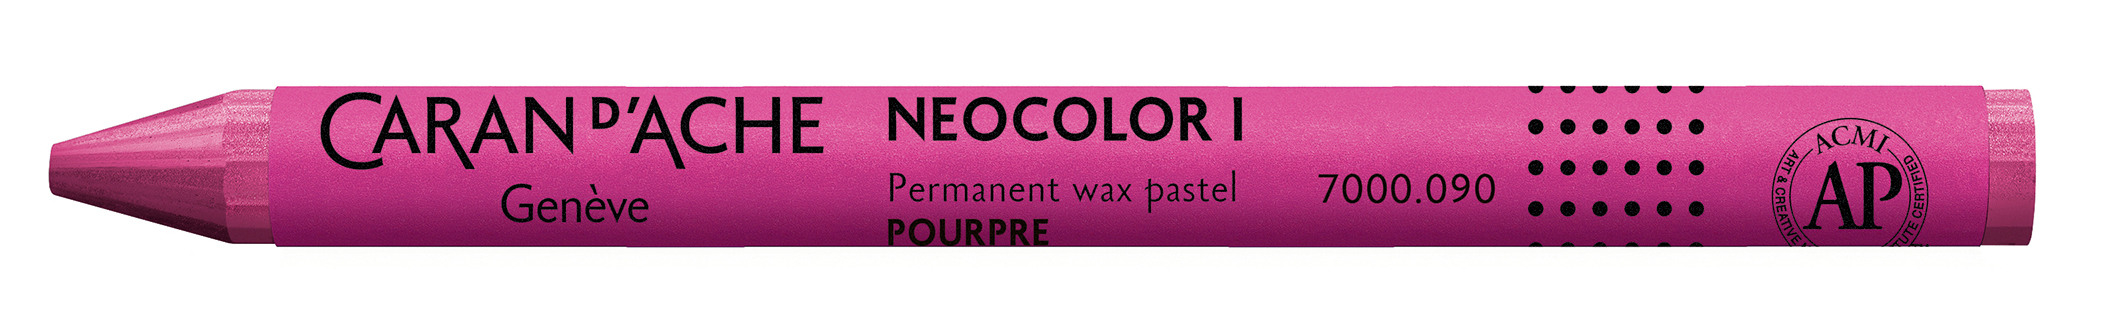 CARAN D'ACHE Wachsmalkreide Neocolor 1 7000.090 purpur